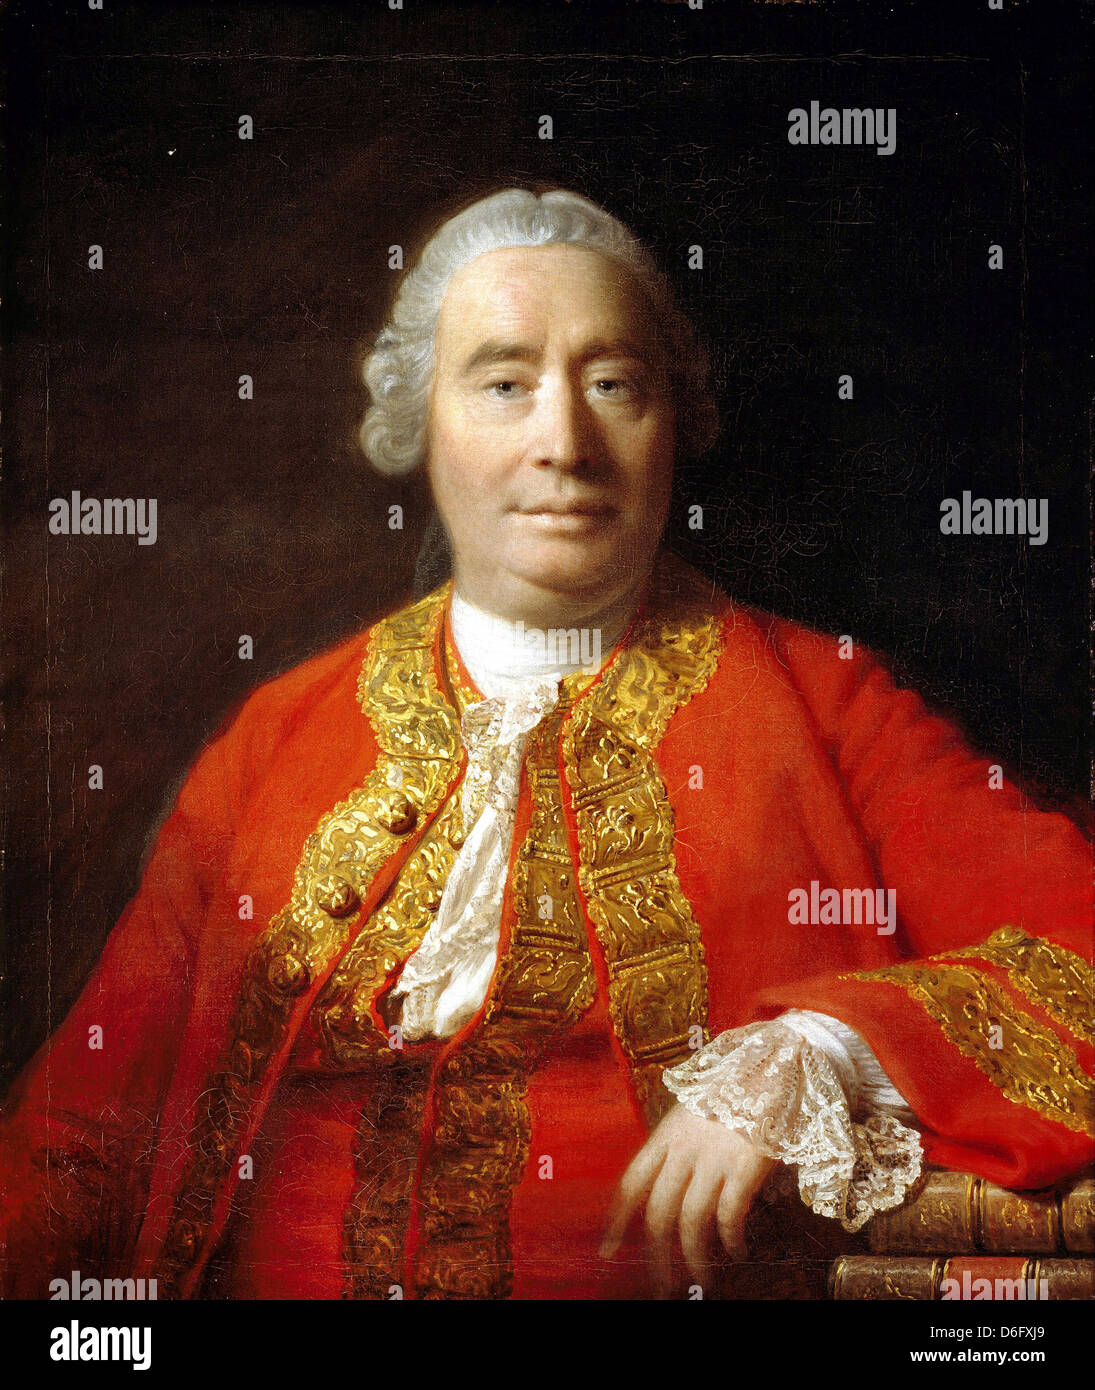 Allan Ramsay, David Hume, 1711 - 1776. Historian and philosopher 1766 Oil on canvas. National Gallery of Scotland, Edinburgh Stock Photo